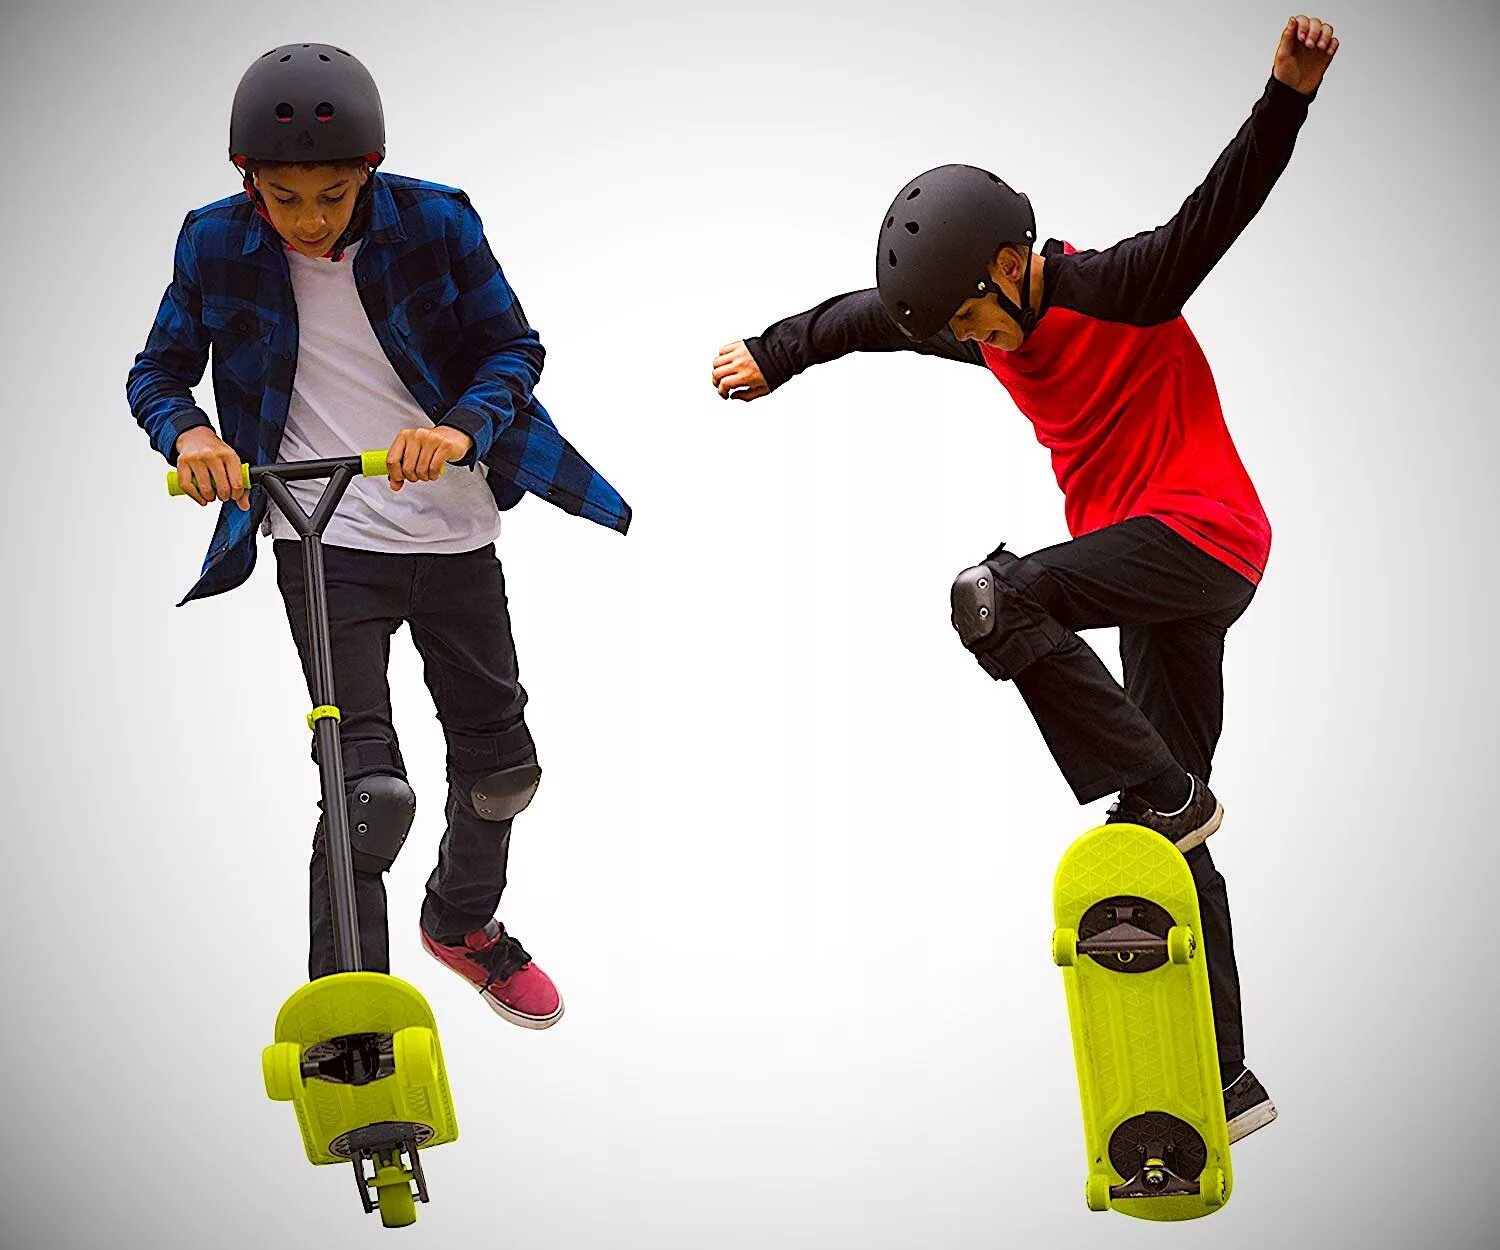 Скейтборд скутер MORFBOARD Skate & Scoot. Самокат трюковой детский Skate. Самокат ролики скейтборд. Мальчик на самокате. Skate bike